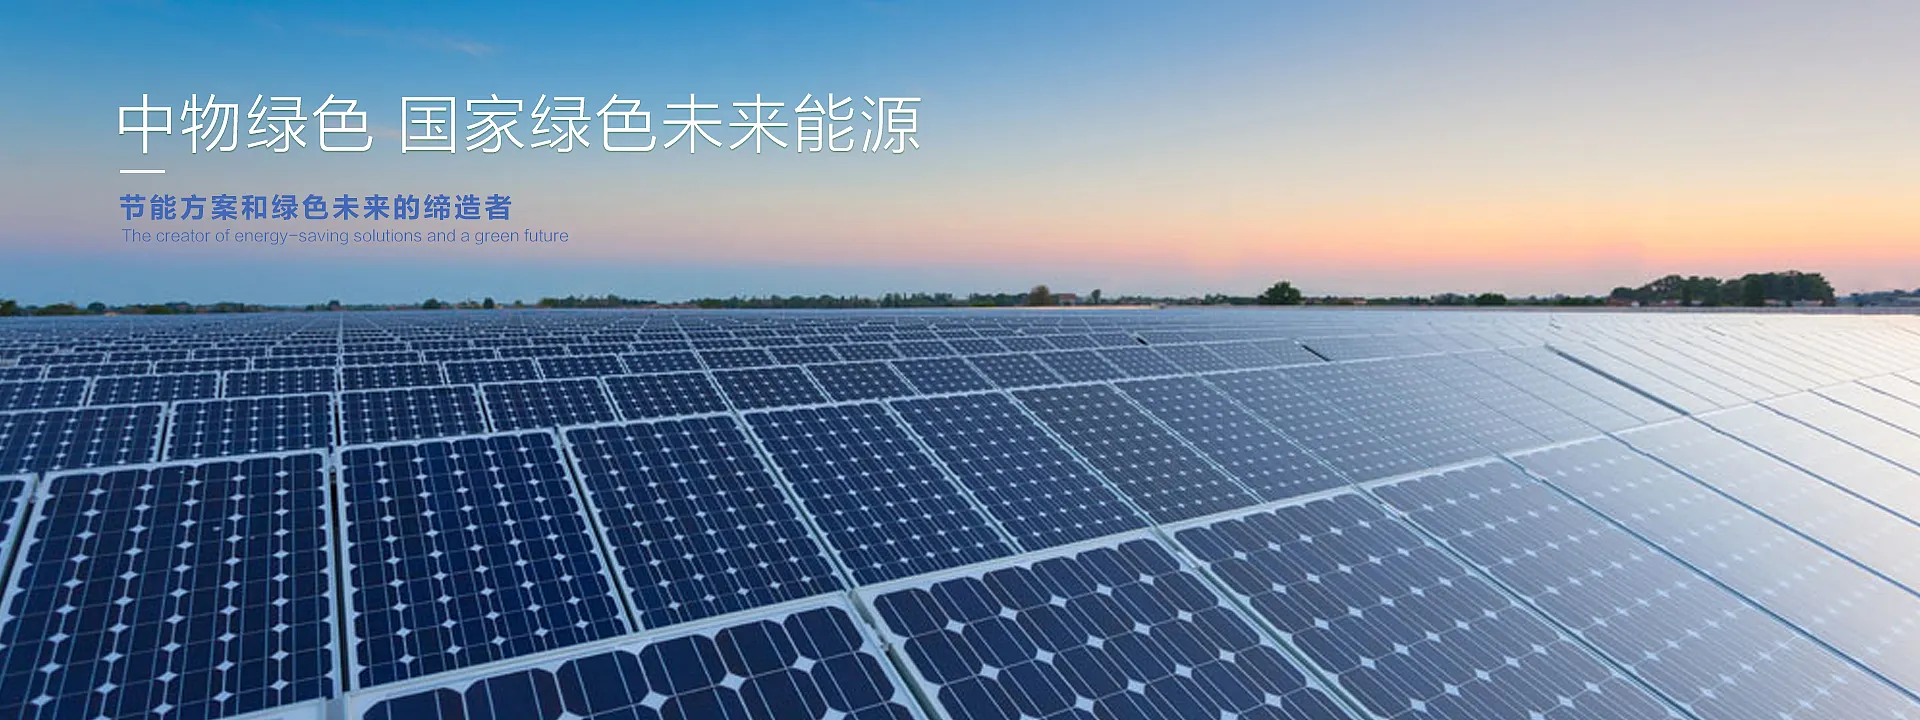 Sino Green New Energy